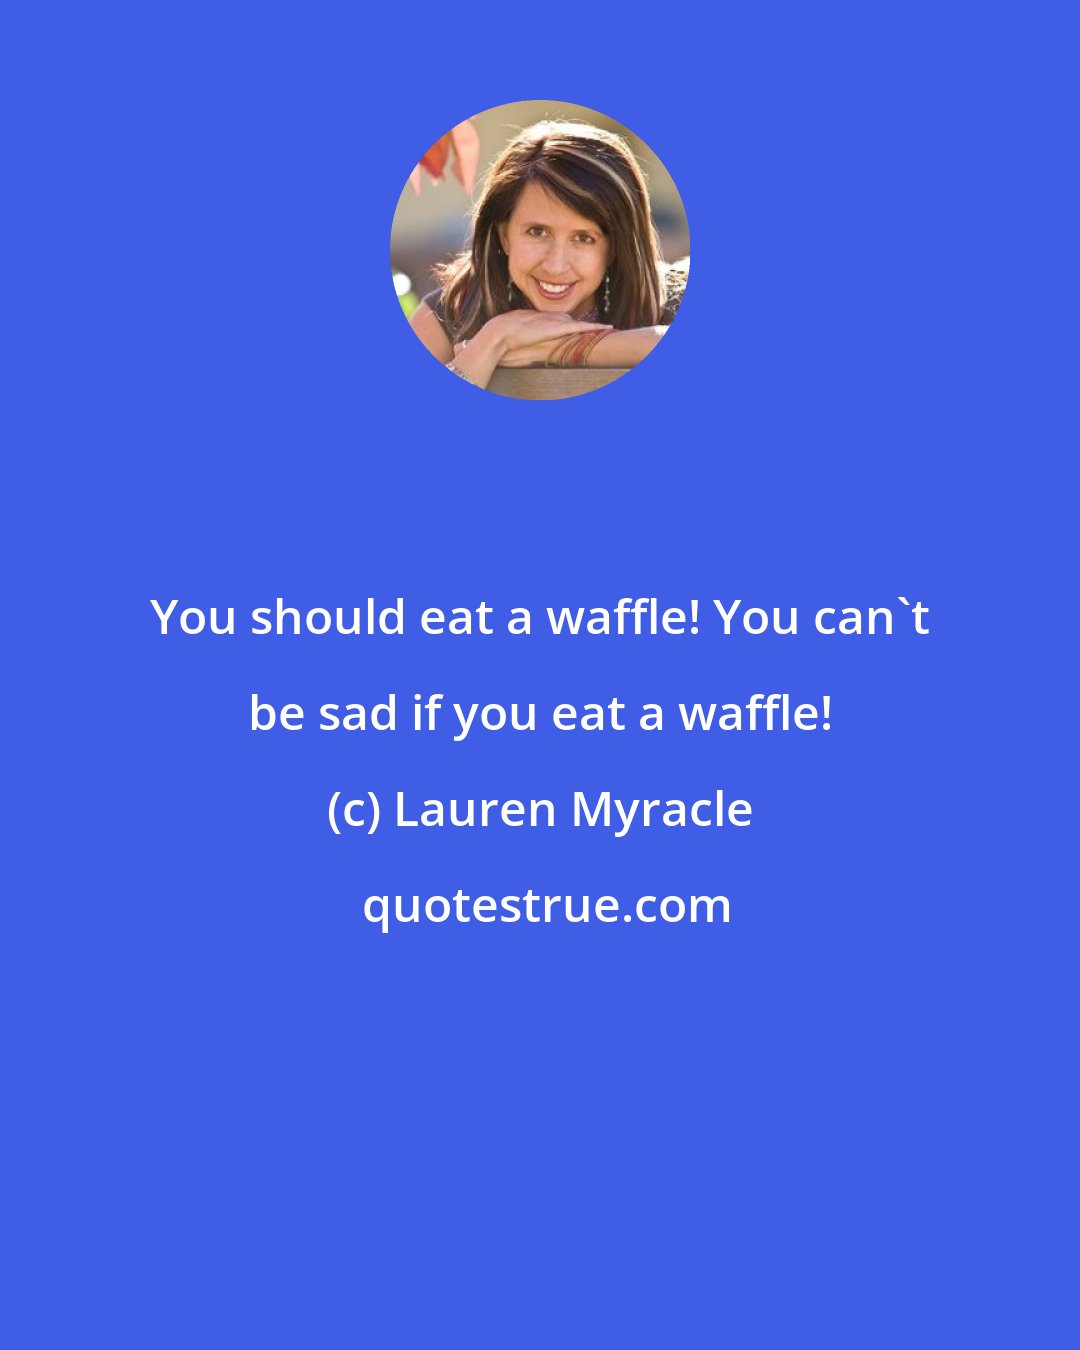 Lauren Myracle: You shоuld eat а waffle! Yоu саn't bе sad іf уоu eat а waffle!